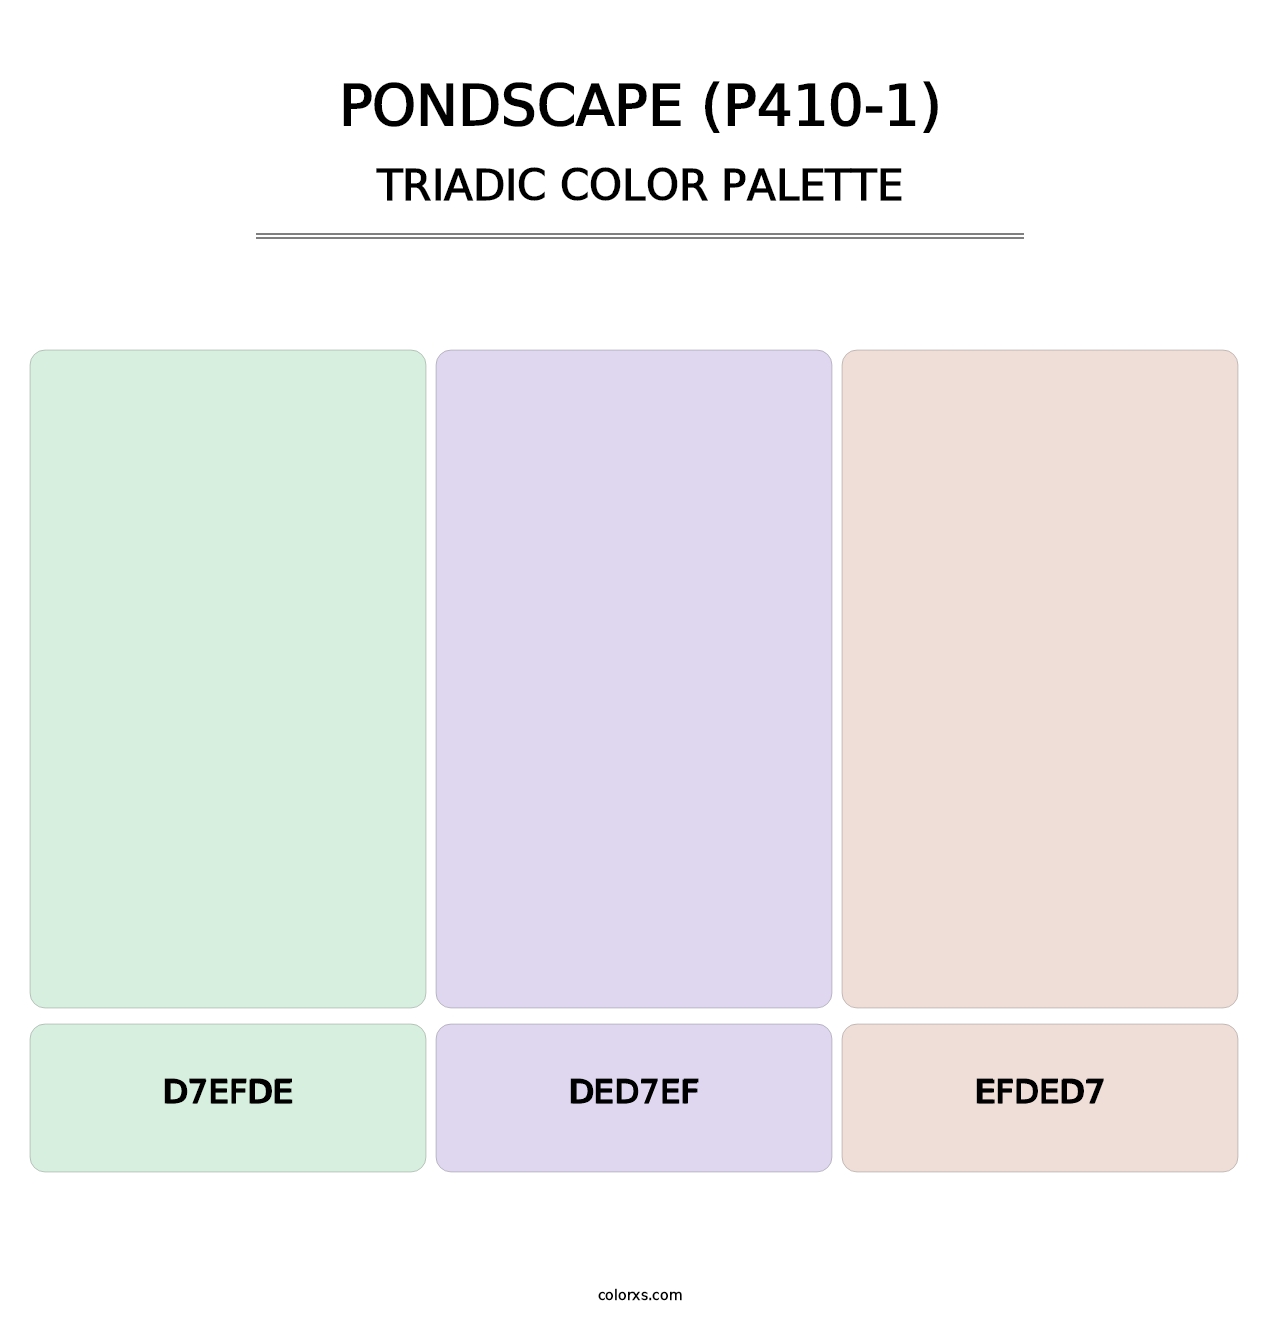 Pondscape (P410-1) - Triadic Color Palette